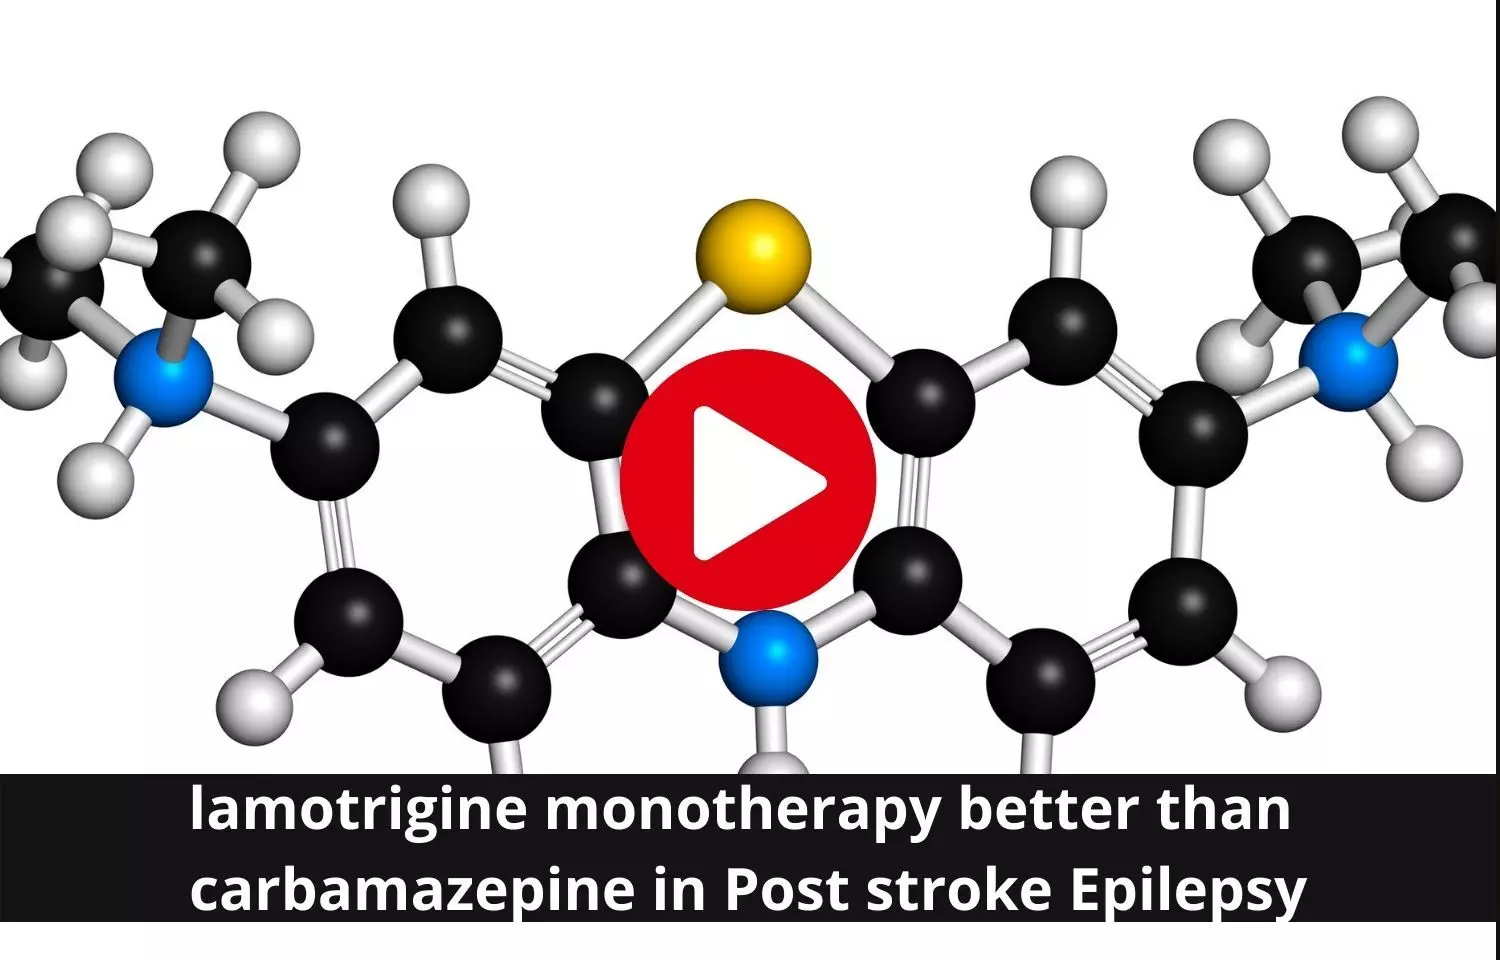 Iamotrigine monotherapy overpowers carbamazepine in post stroke epilepsy